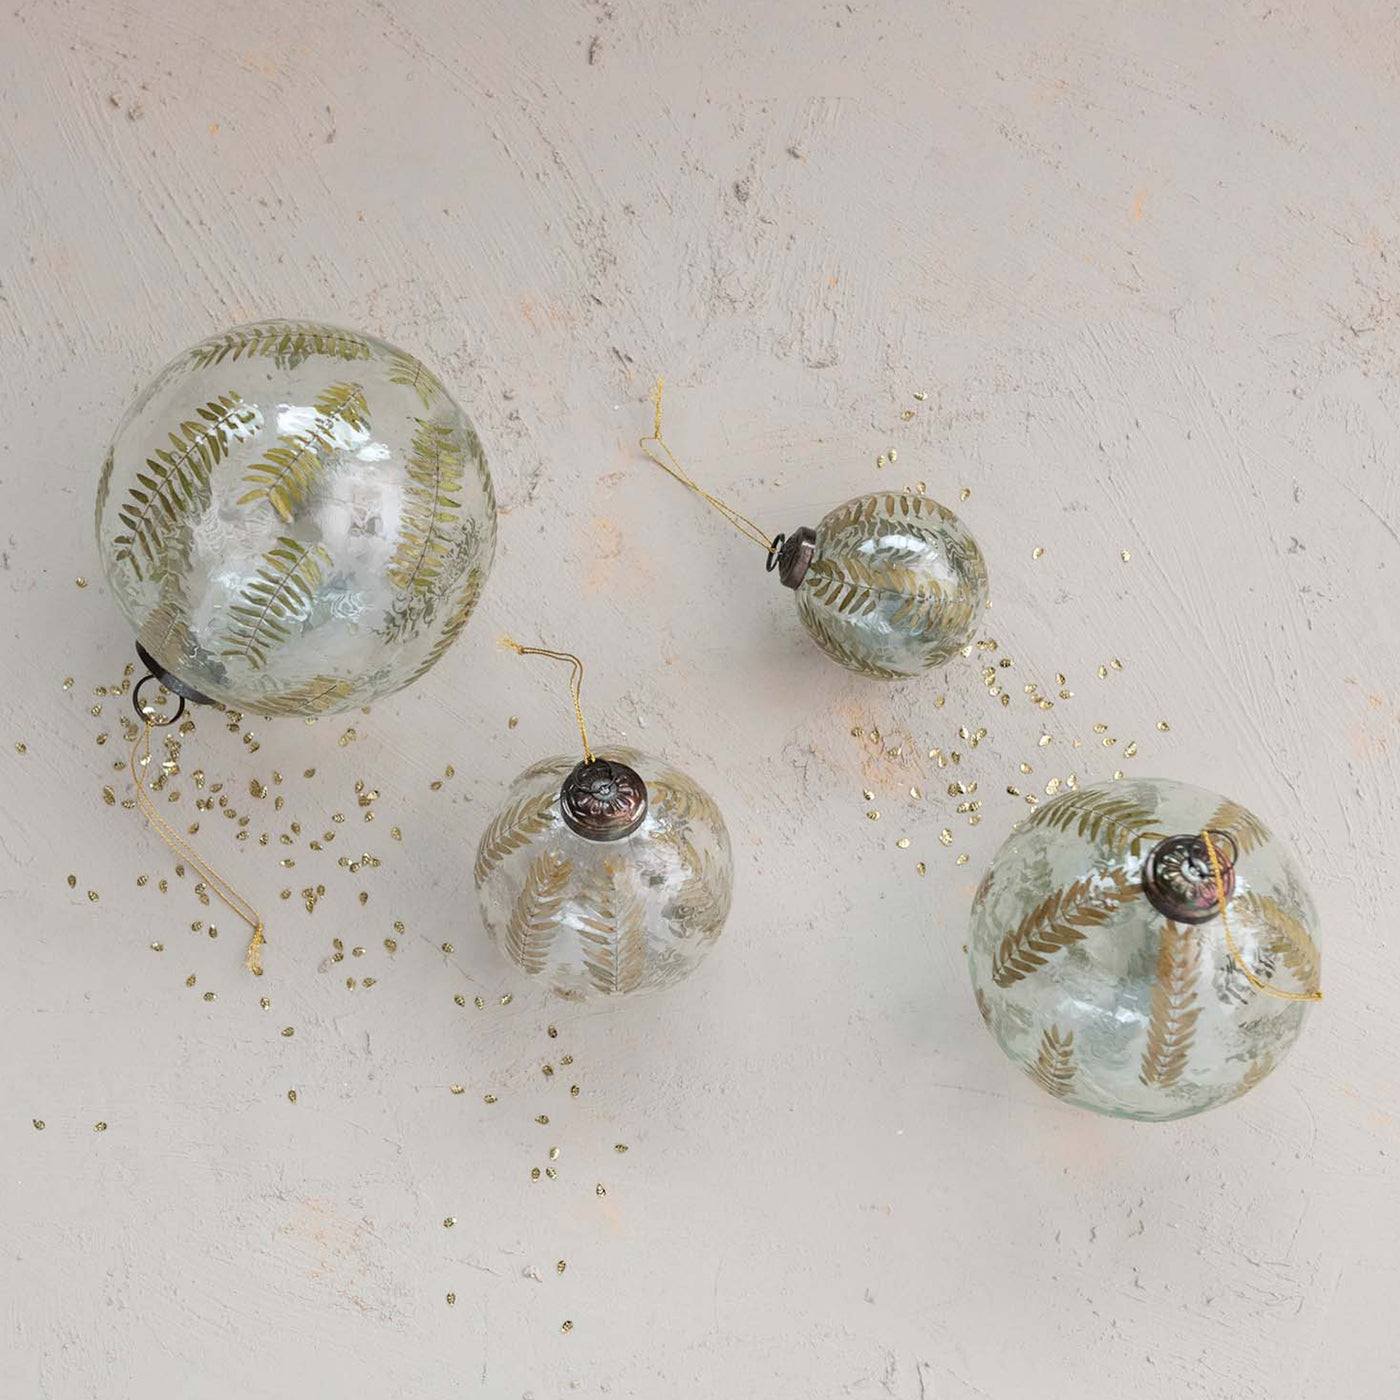 Embedded Natural Botanical Glass Ball Ornament